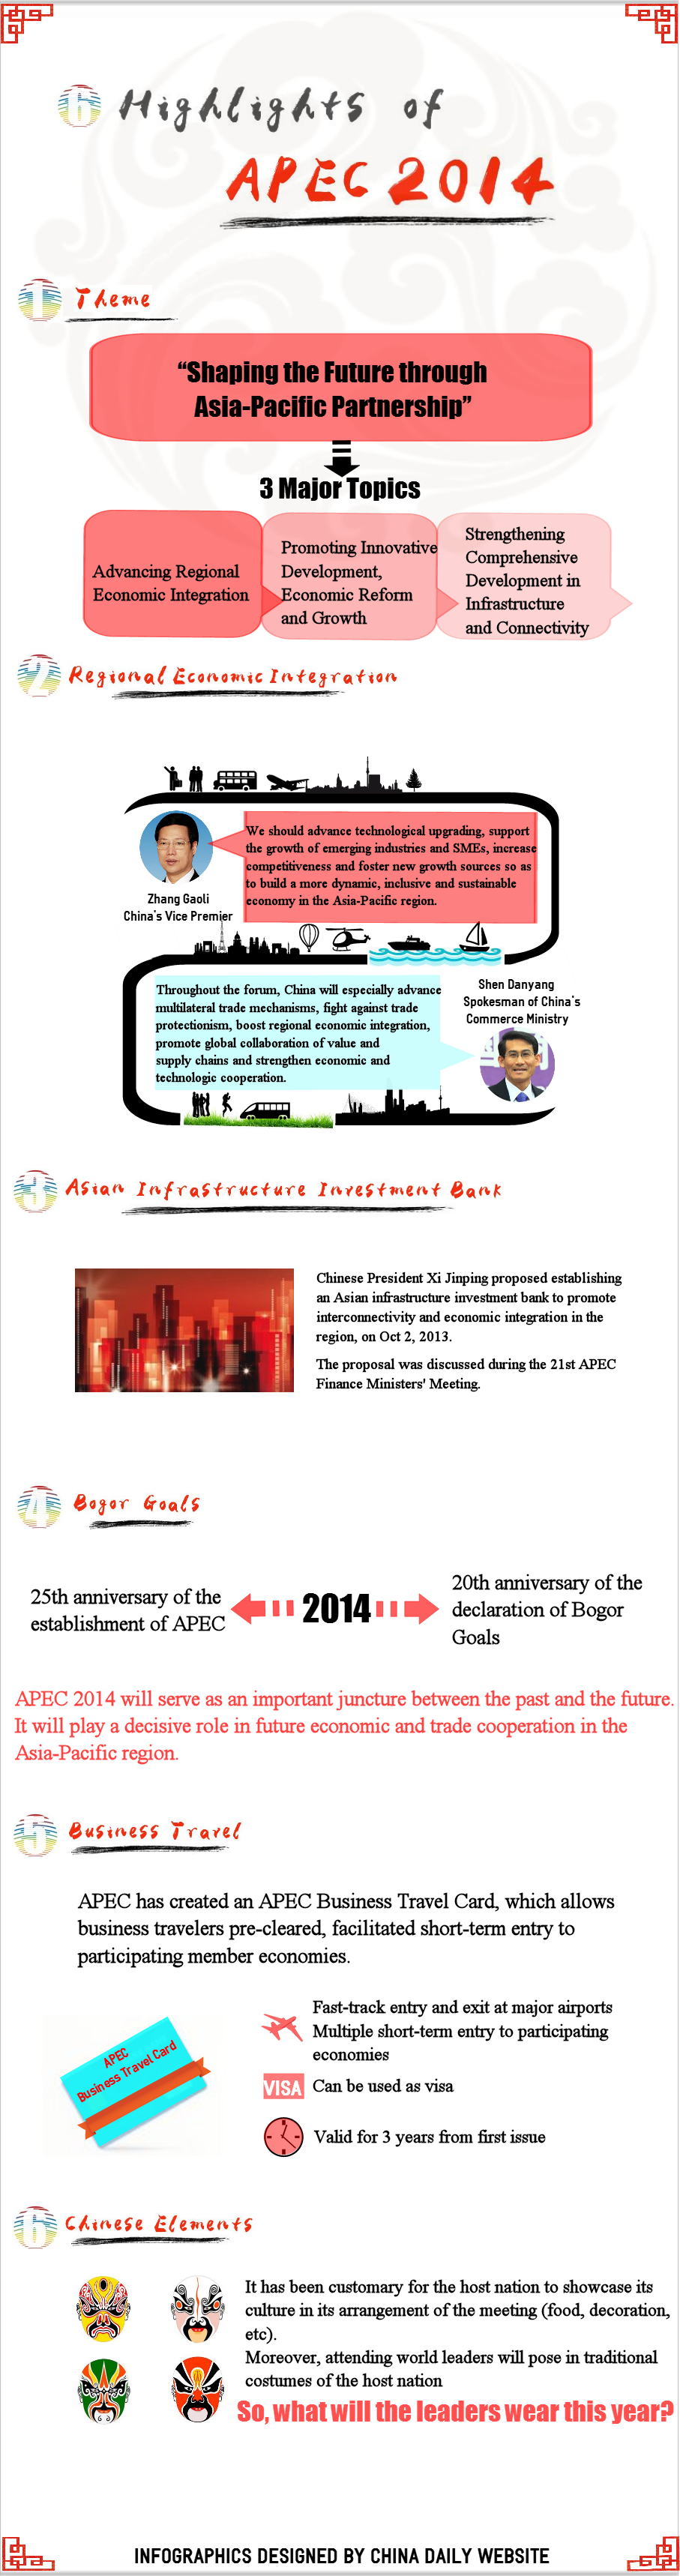 Highlights of APEC 2014 